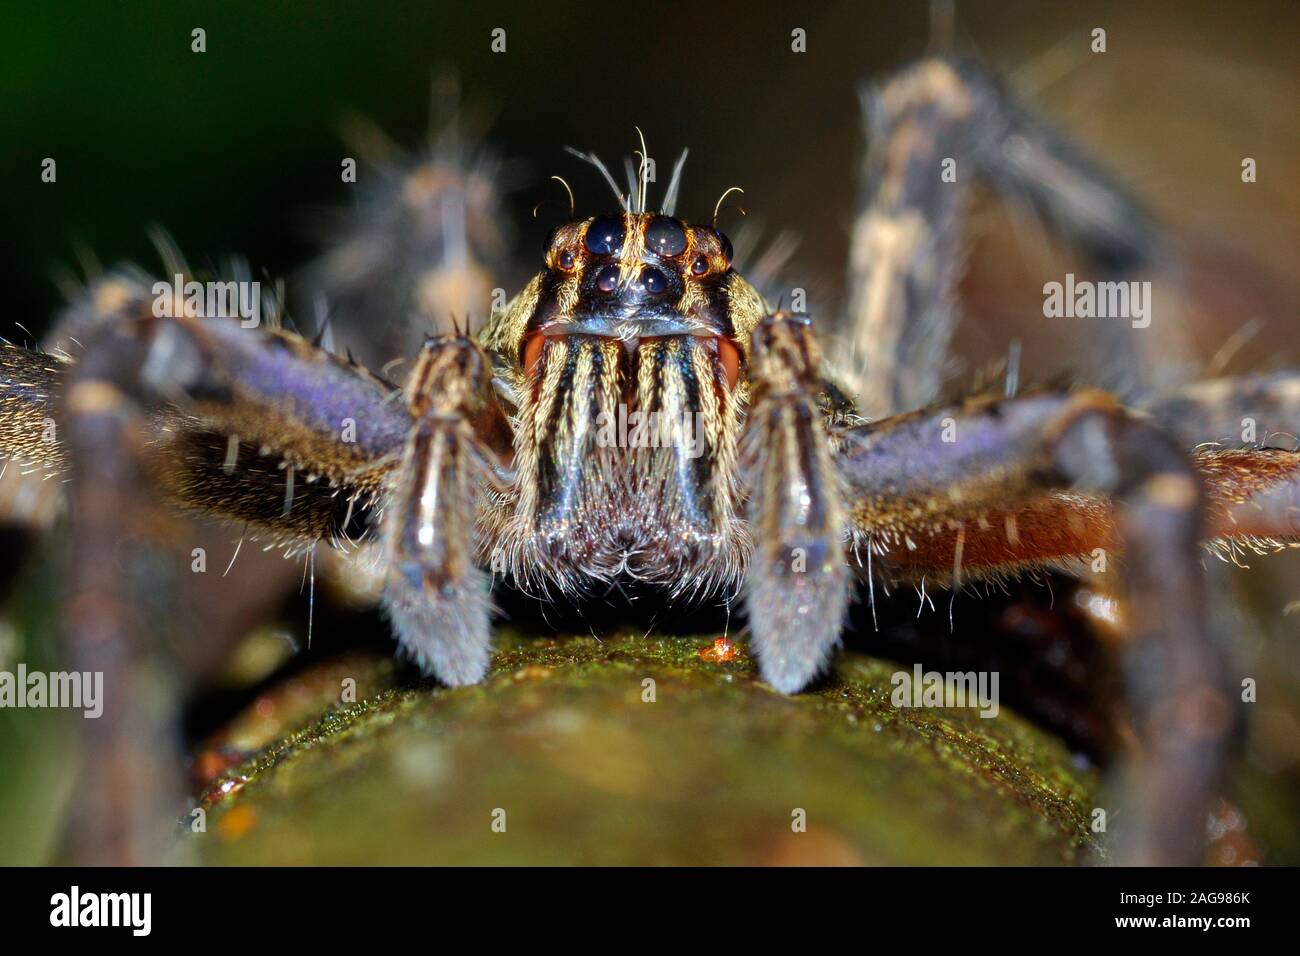 Bromeliad spider, Cupiennius sp., Trechaleidae, Stock Photo